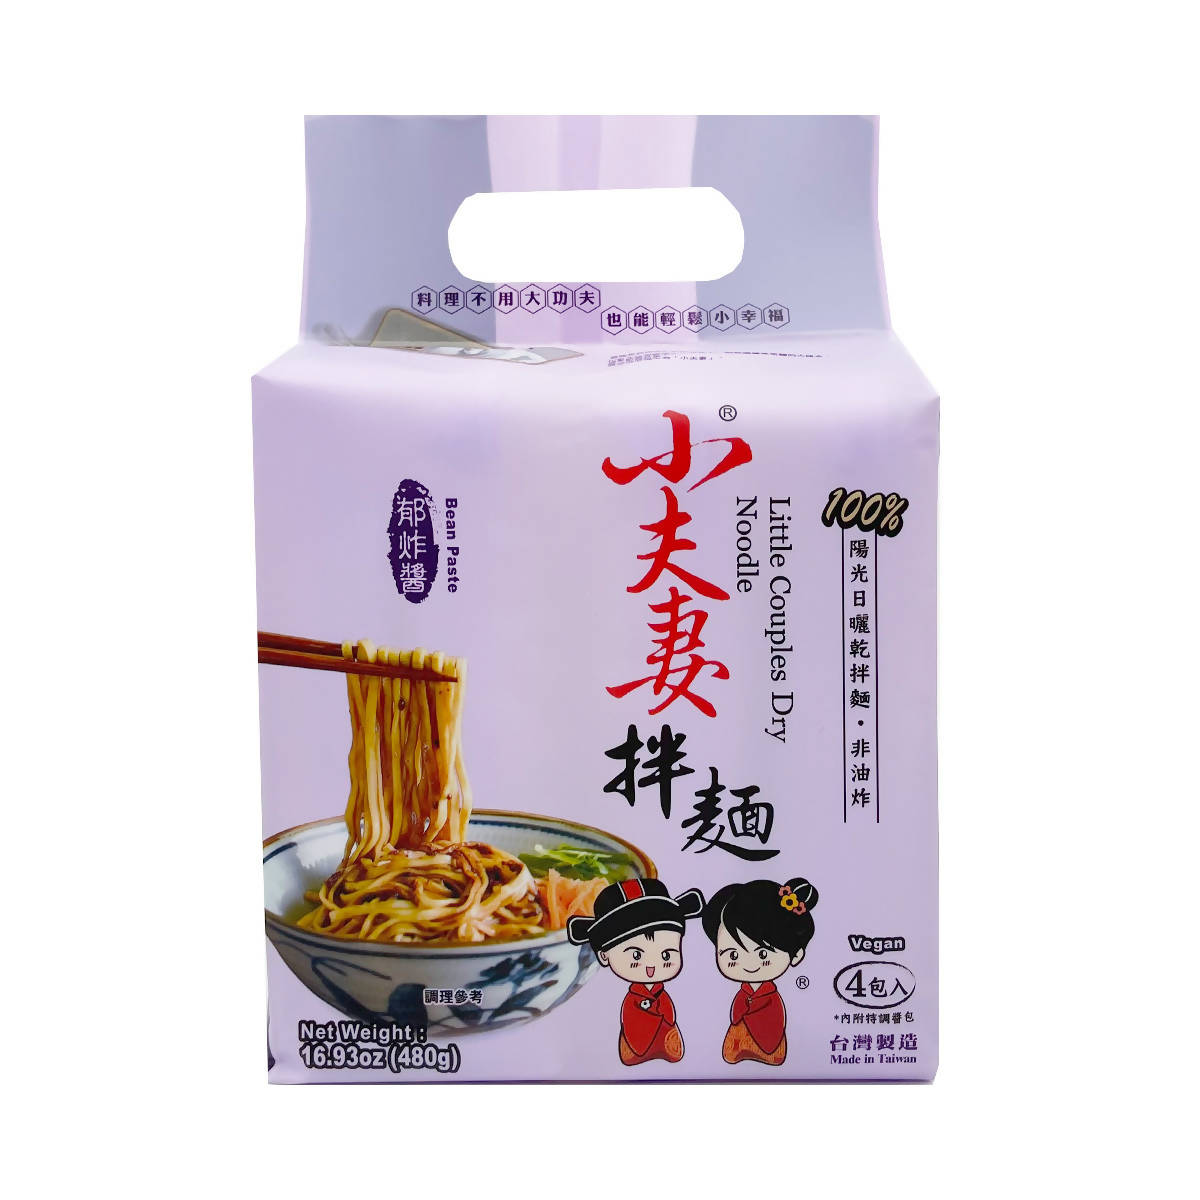 Taiwan Direct Mail【Little Couple】LITTLE COUPLES Yu Zha Sauce Dry Noodles (Vegetarian) 480g 4pcs 